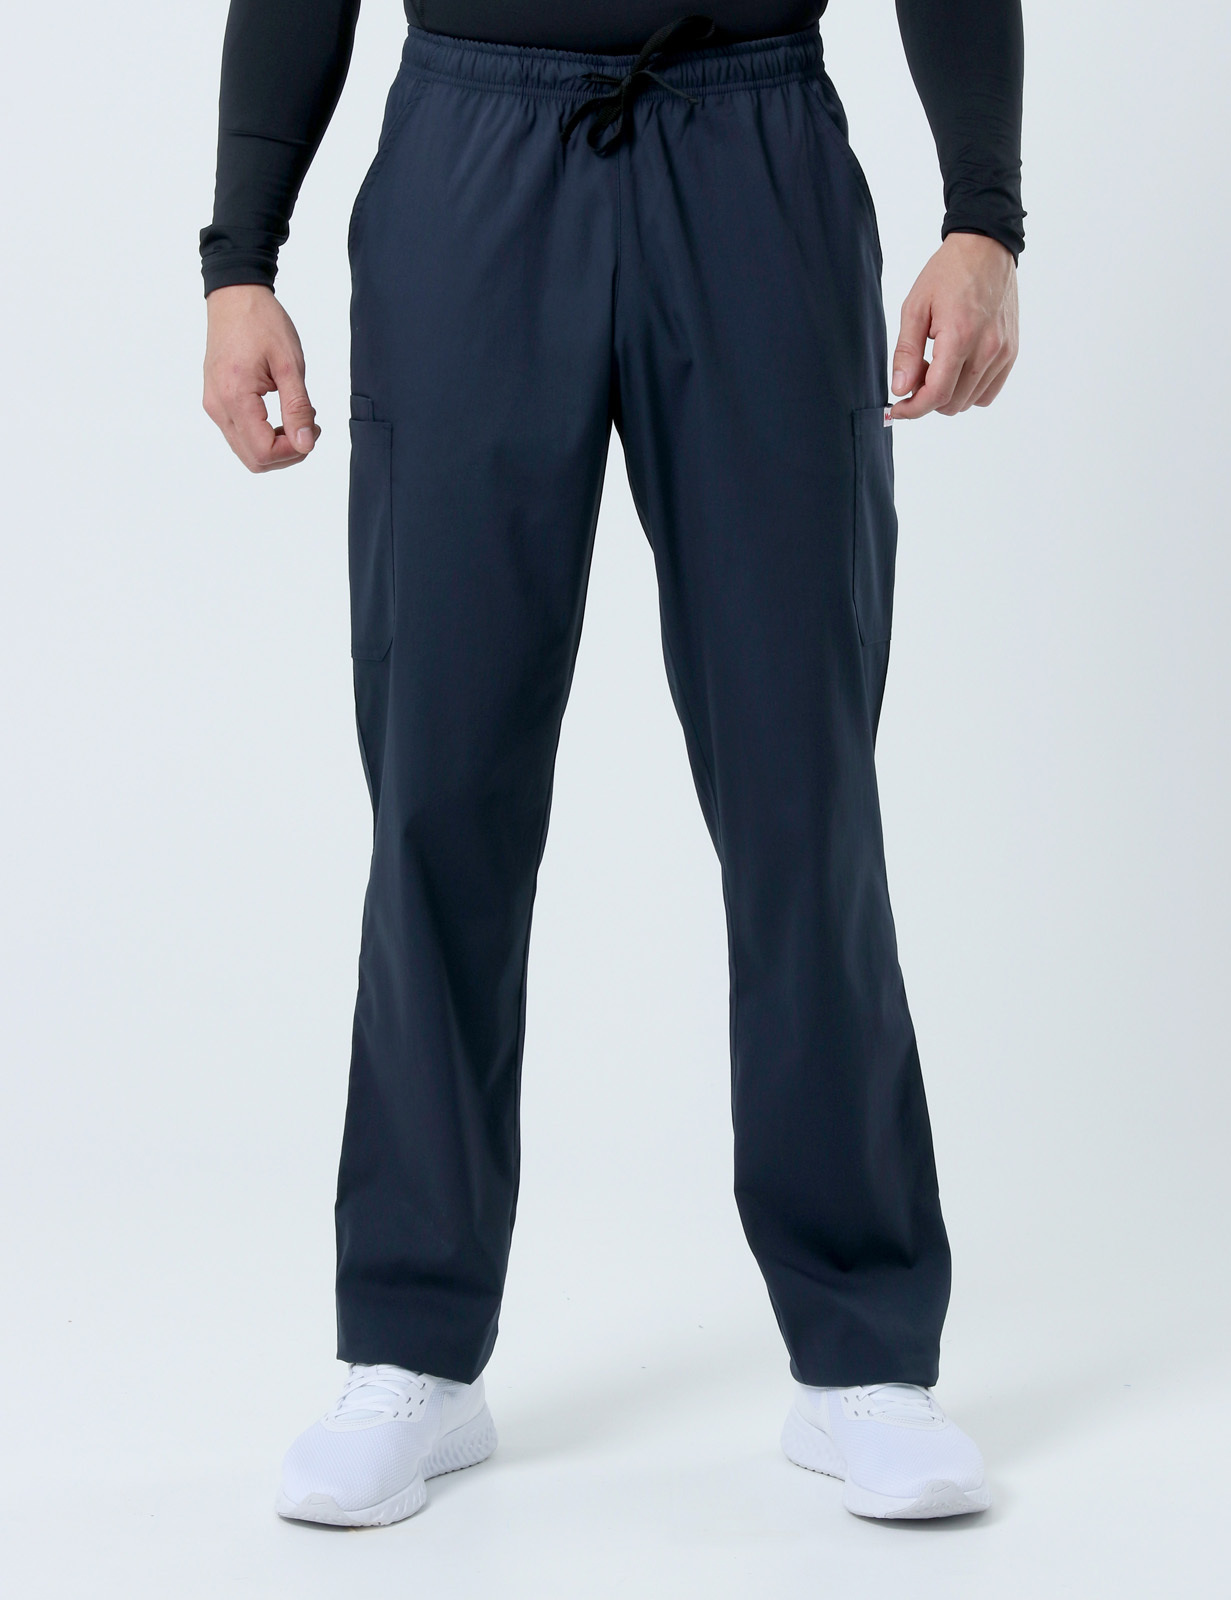 VVED - Men's 4 Pocket Scrub Top and Cargo Pants in Navy (Incl Logo)